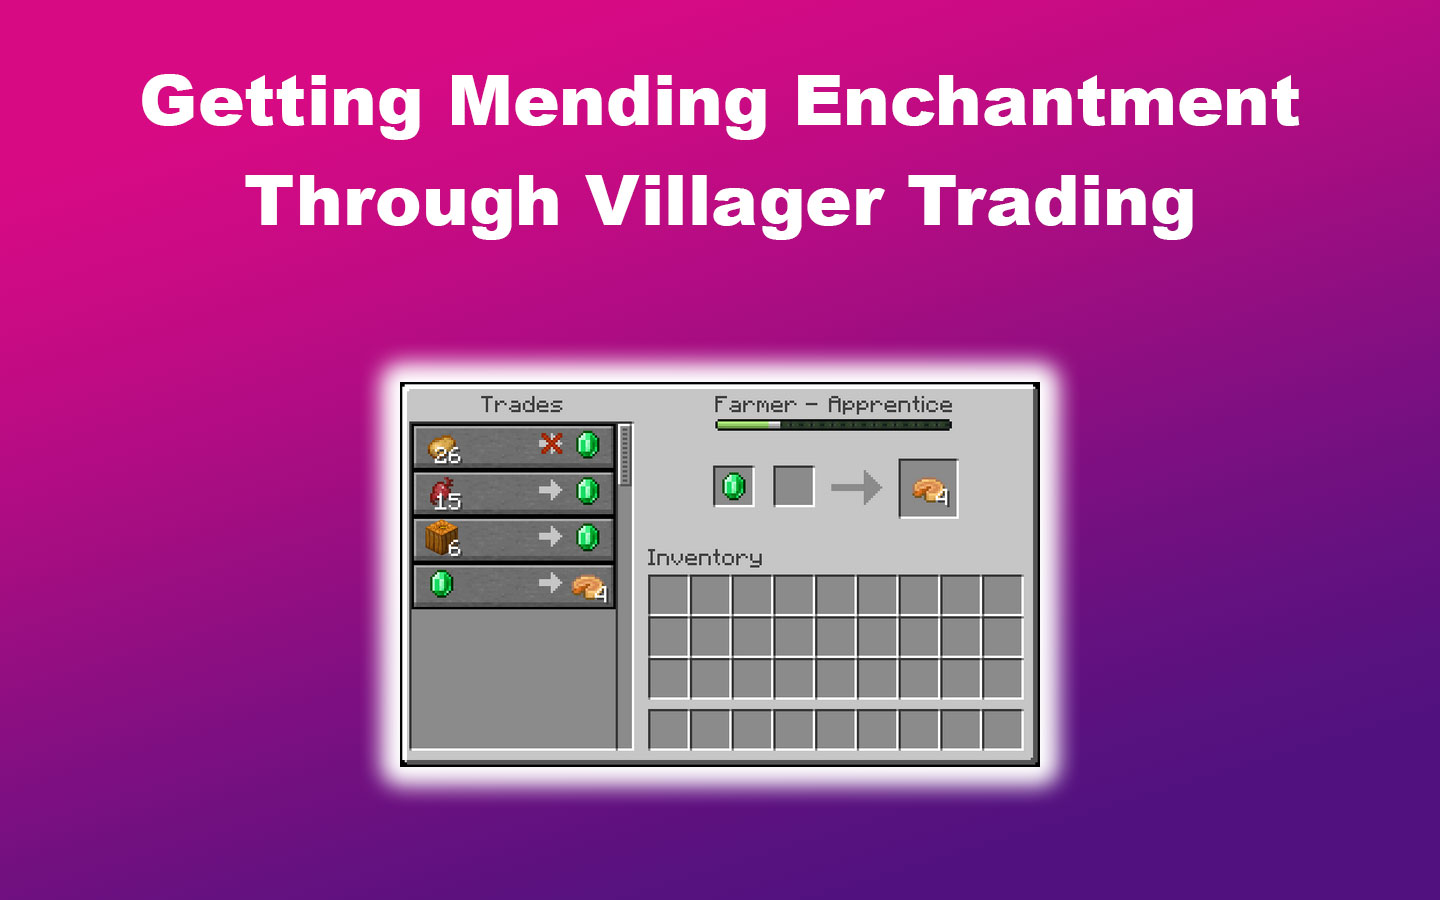 Getting Mending Enchantment Through Villager Trading